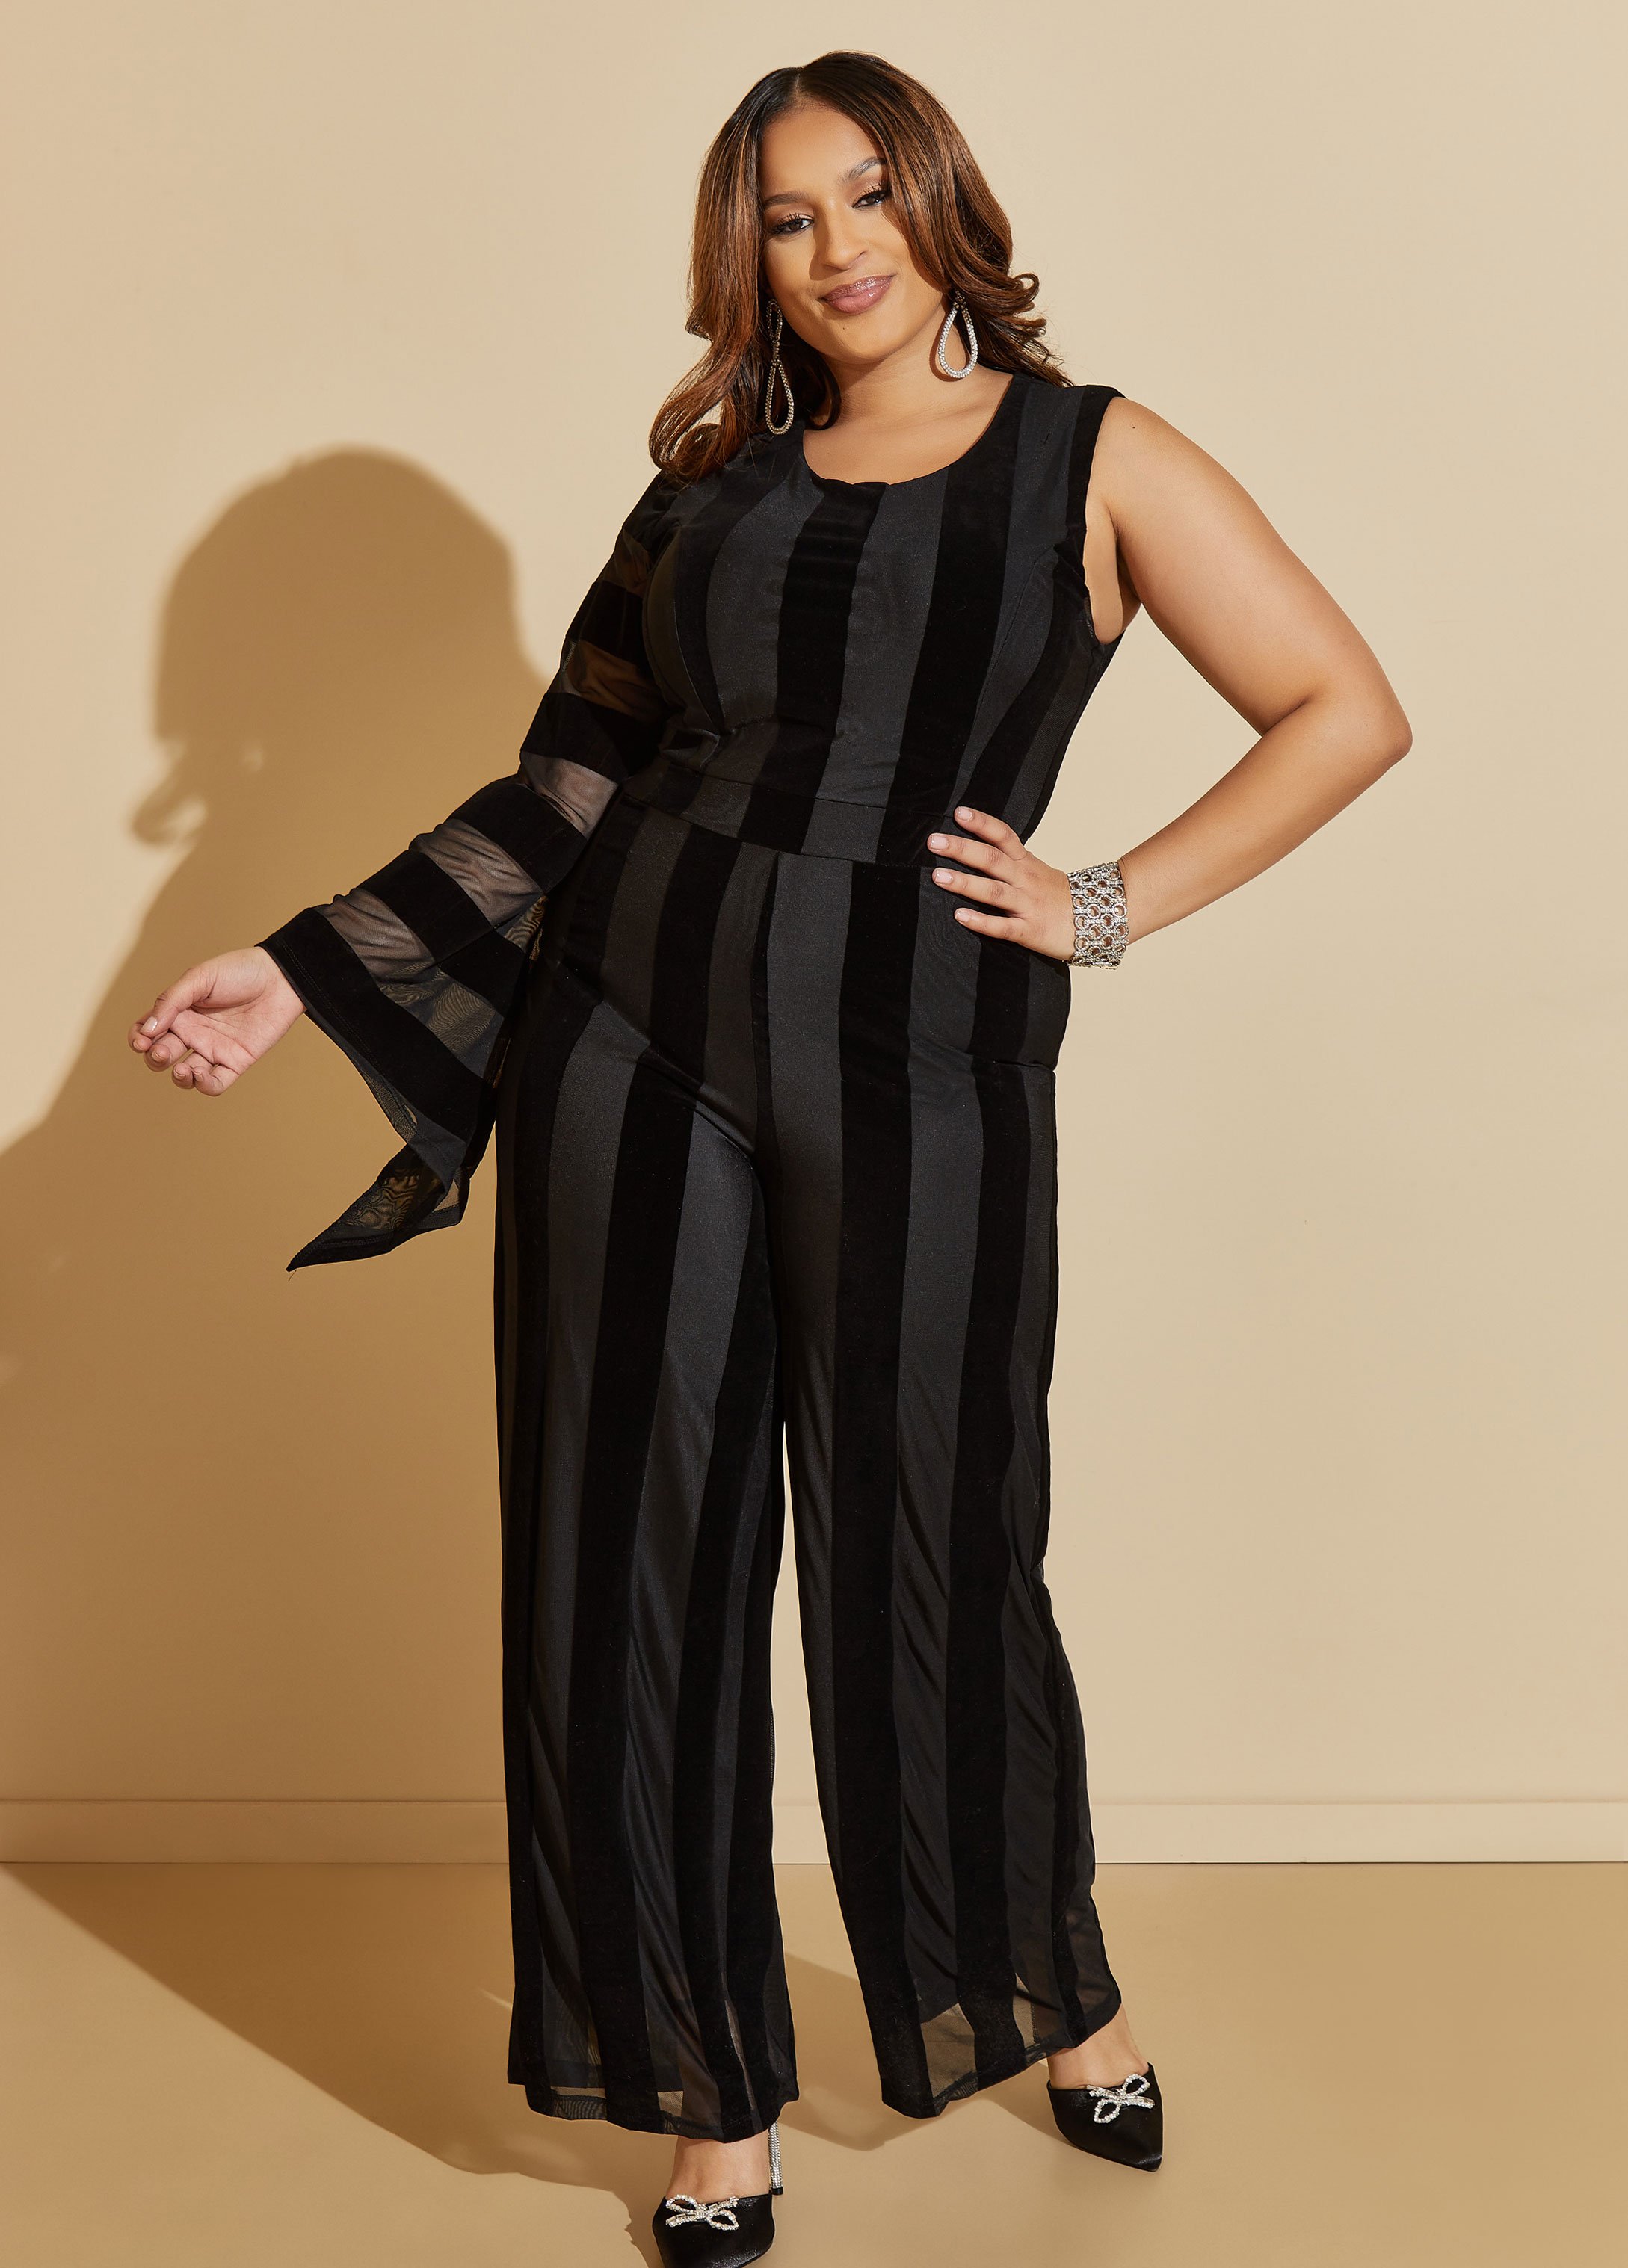 Plus Size One Shoulder Velvet Panel Jumpsuit, BLACK, 14/16 - Ashley Stewart